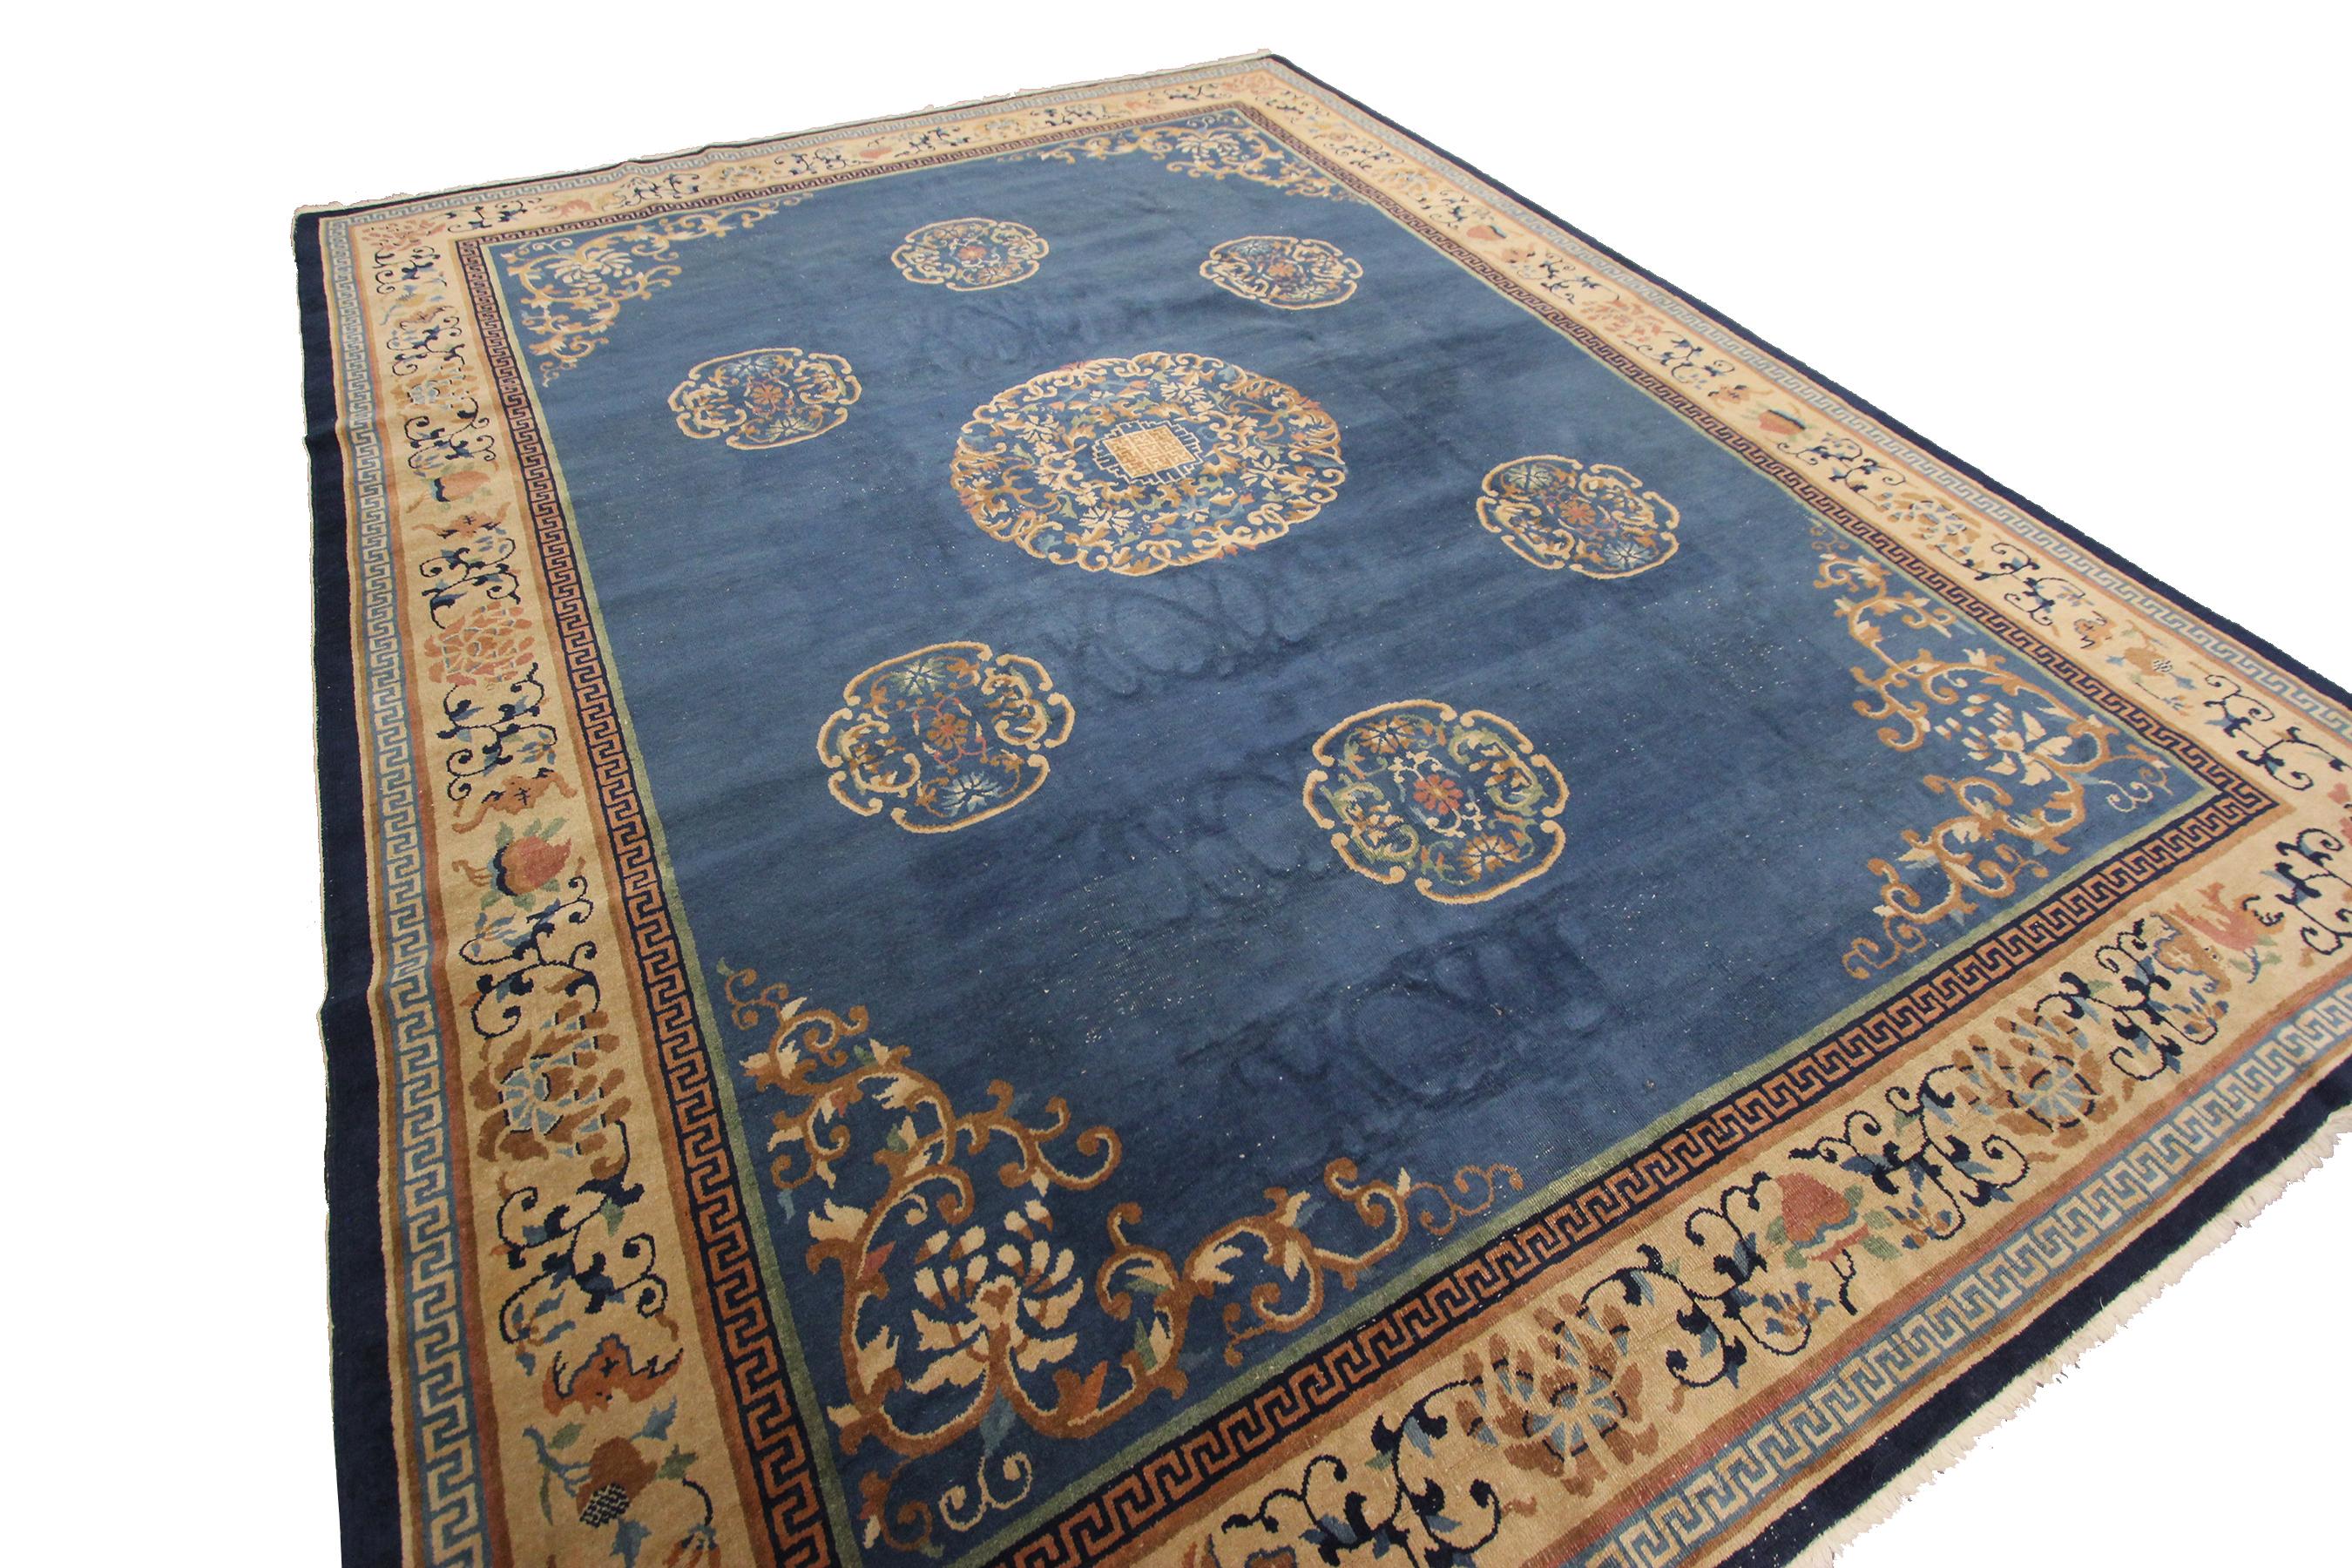 Antique Art Deco rug Chinese rug rare Art Nouveau Peking Rug Blue
9' x 11'7